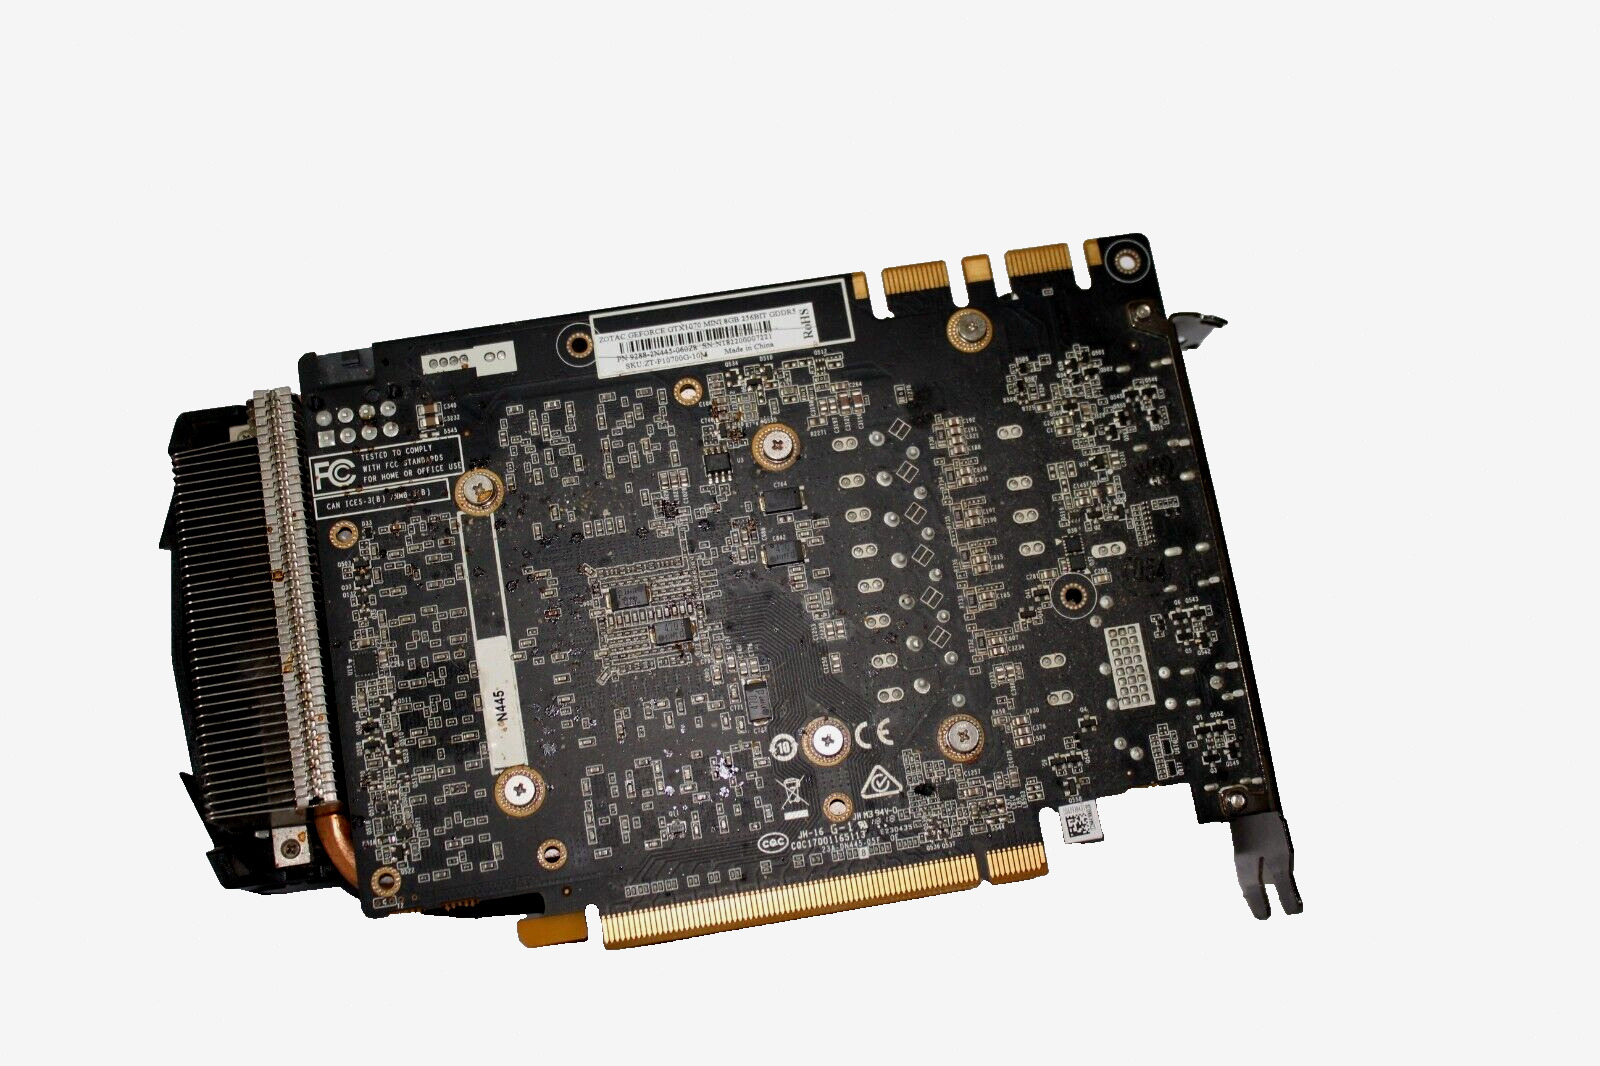 ZOTAC GeForce GTX 1070 Ti Mini 8GB GDDR5 Graphics Card Working - Tested